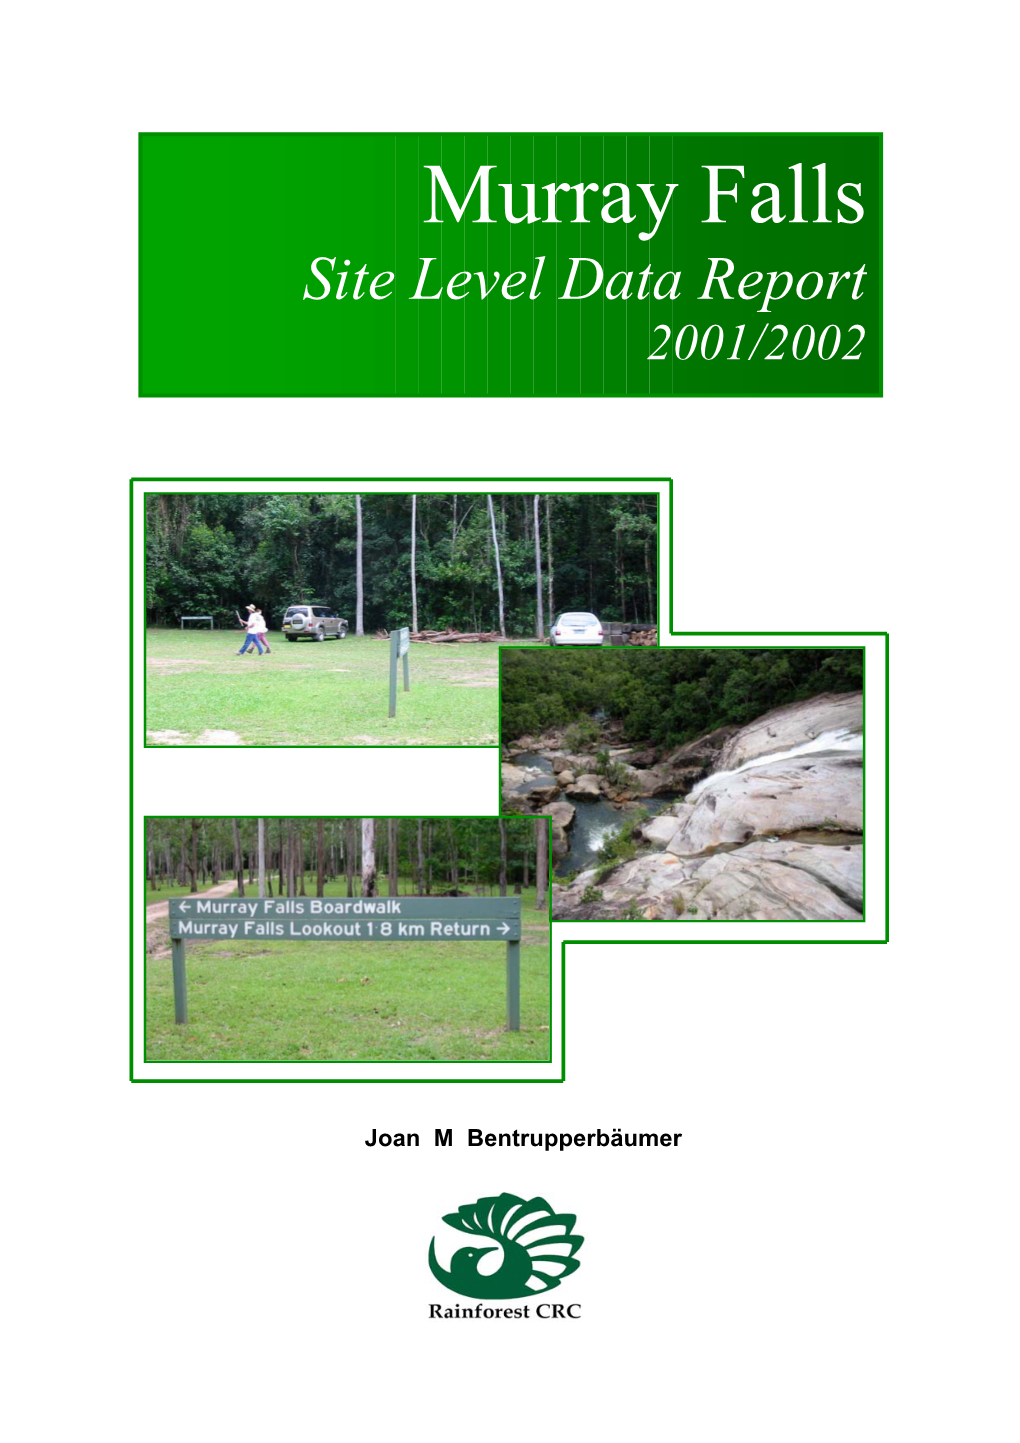 Murray Falls Site Level Data Report 2001/2002